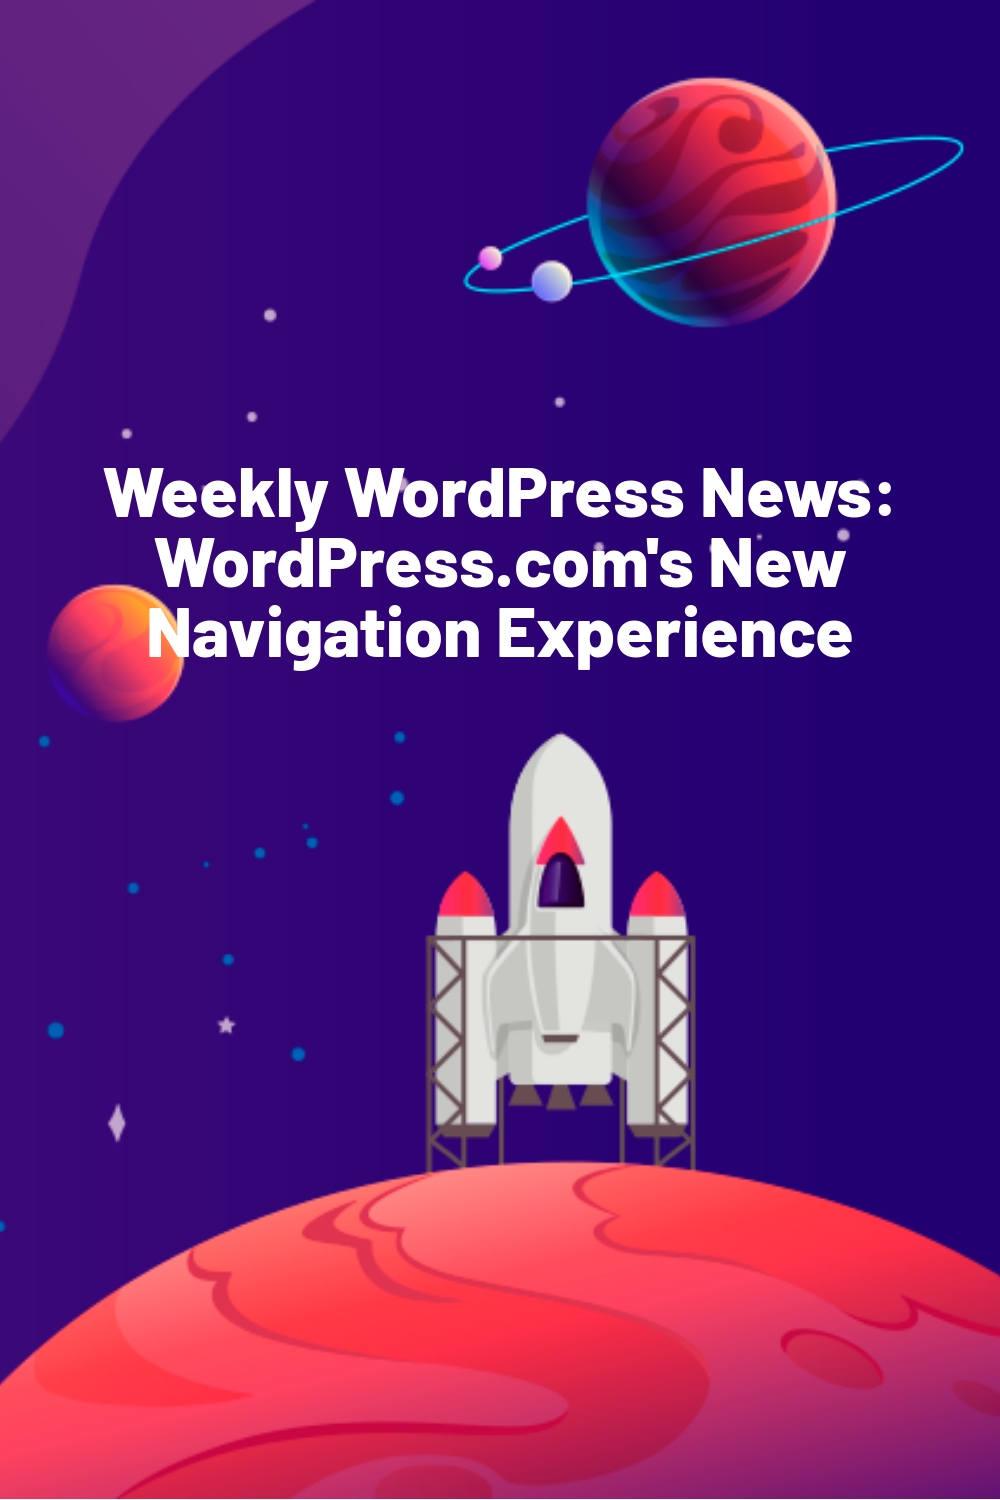 Weekly WordPress News: WordPress.com’s New Navigation Experience